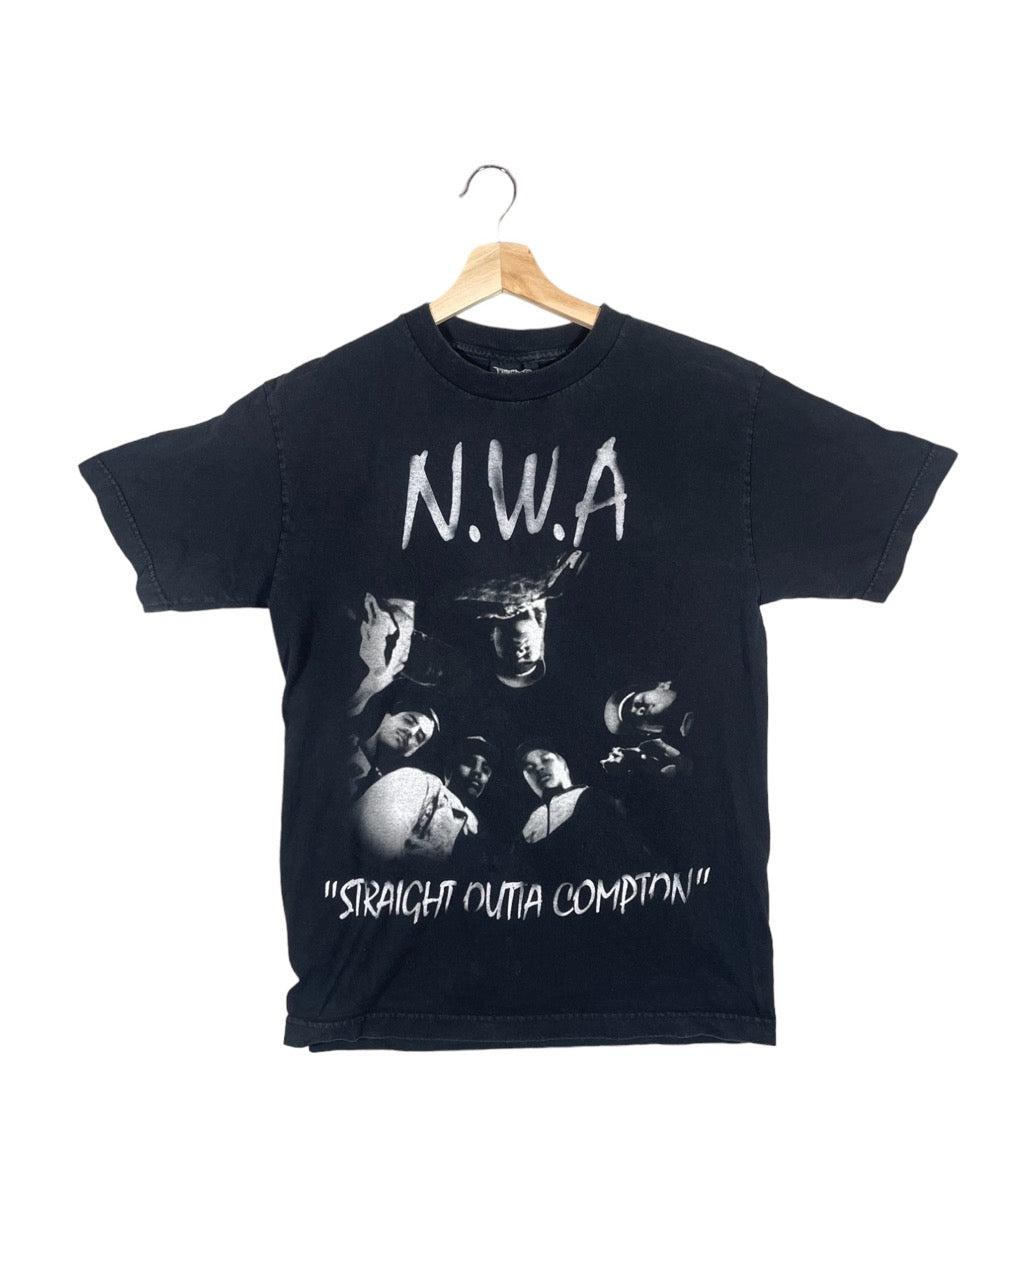 Vintage 2005 NWA "Straight Outta Compton" T-Shirt